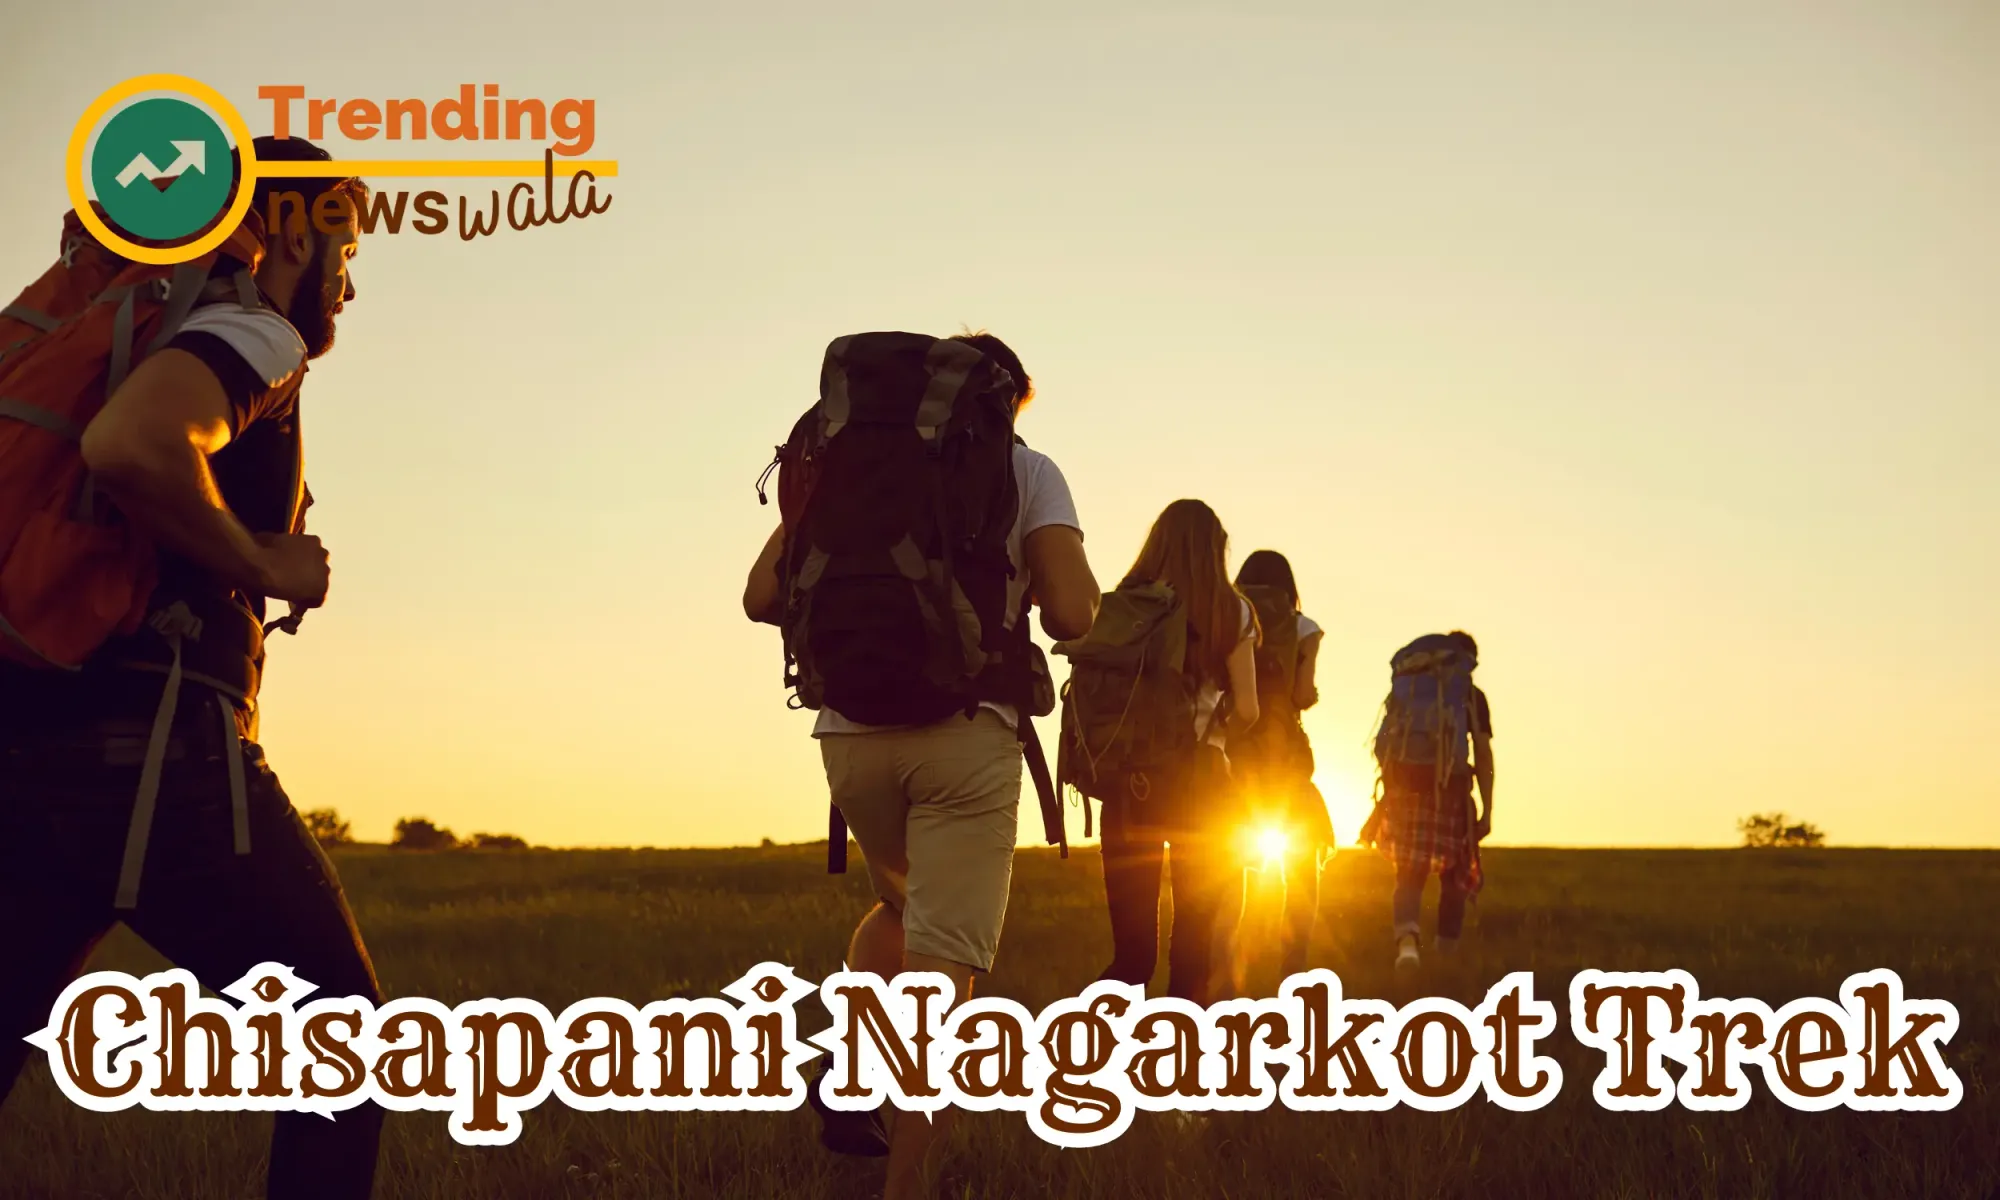 The Chisapani-Nagarkot Trek is a relatively short and rewarding trekking route near Kathmandu, Nepal